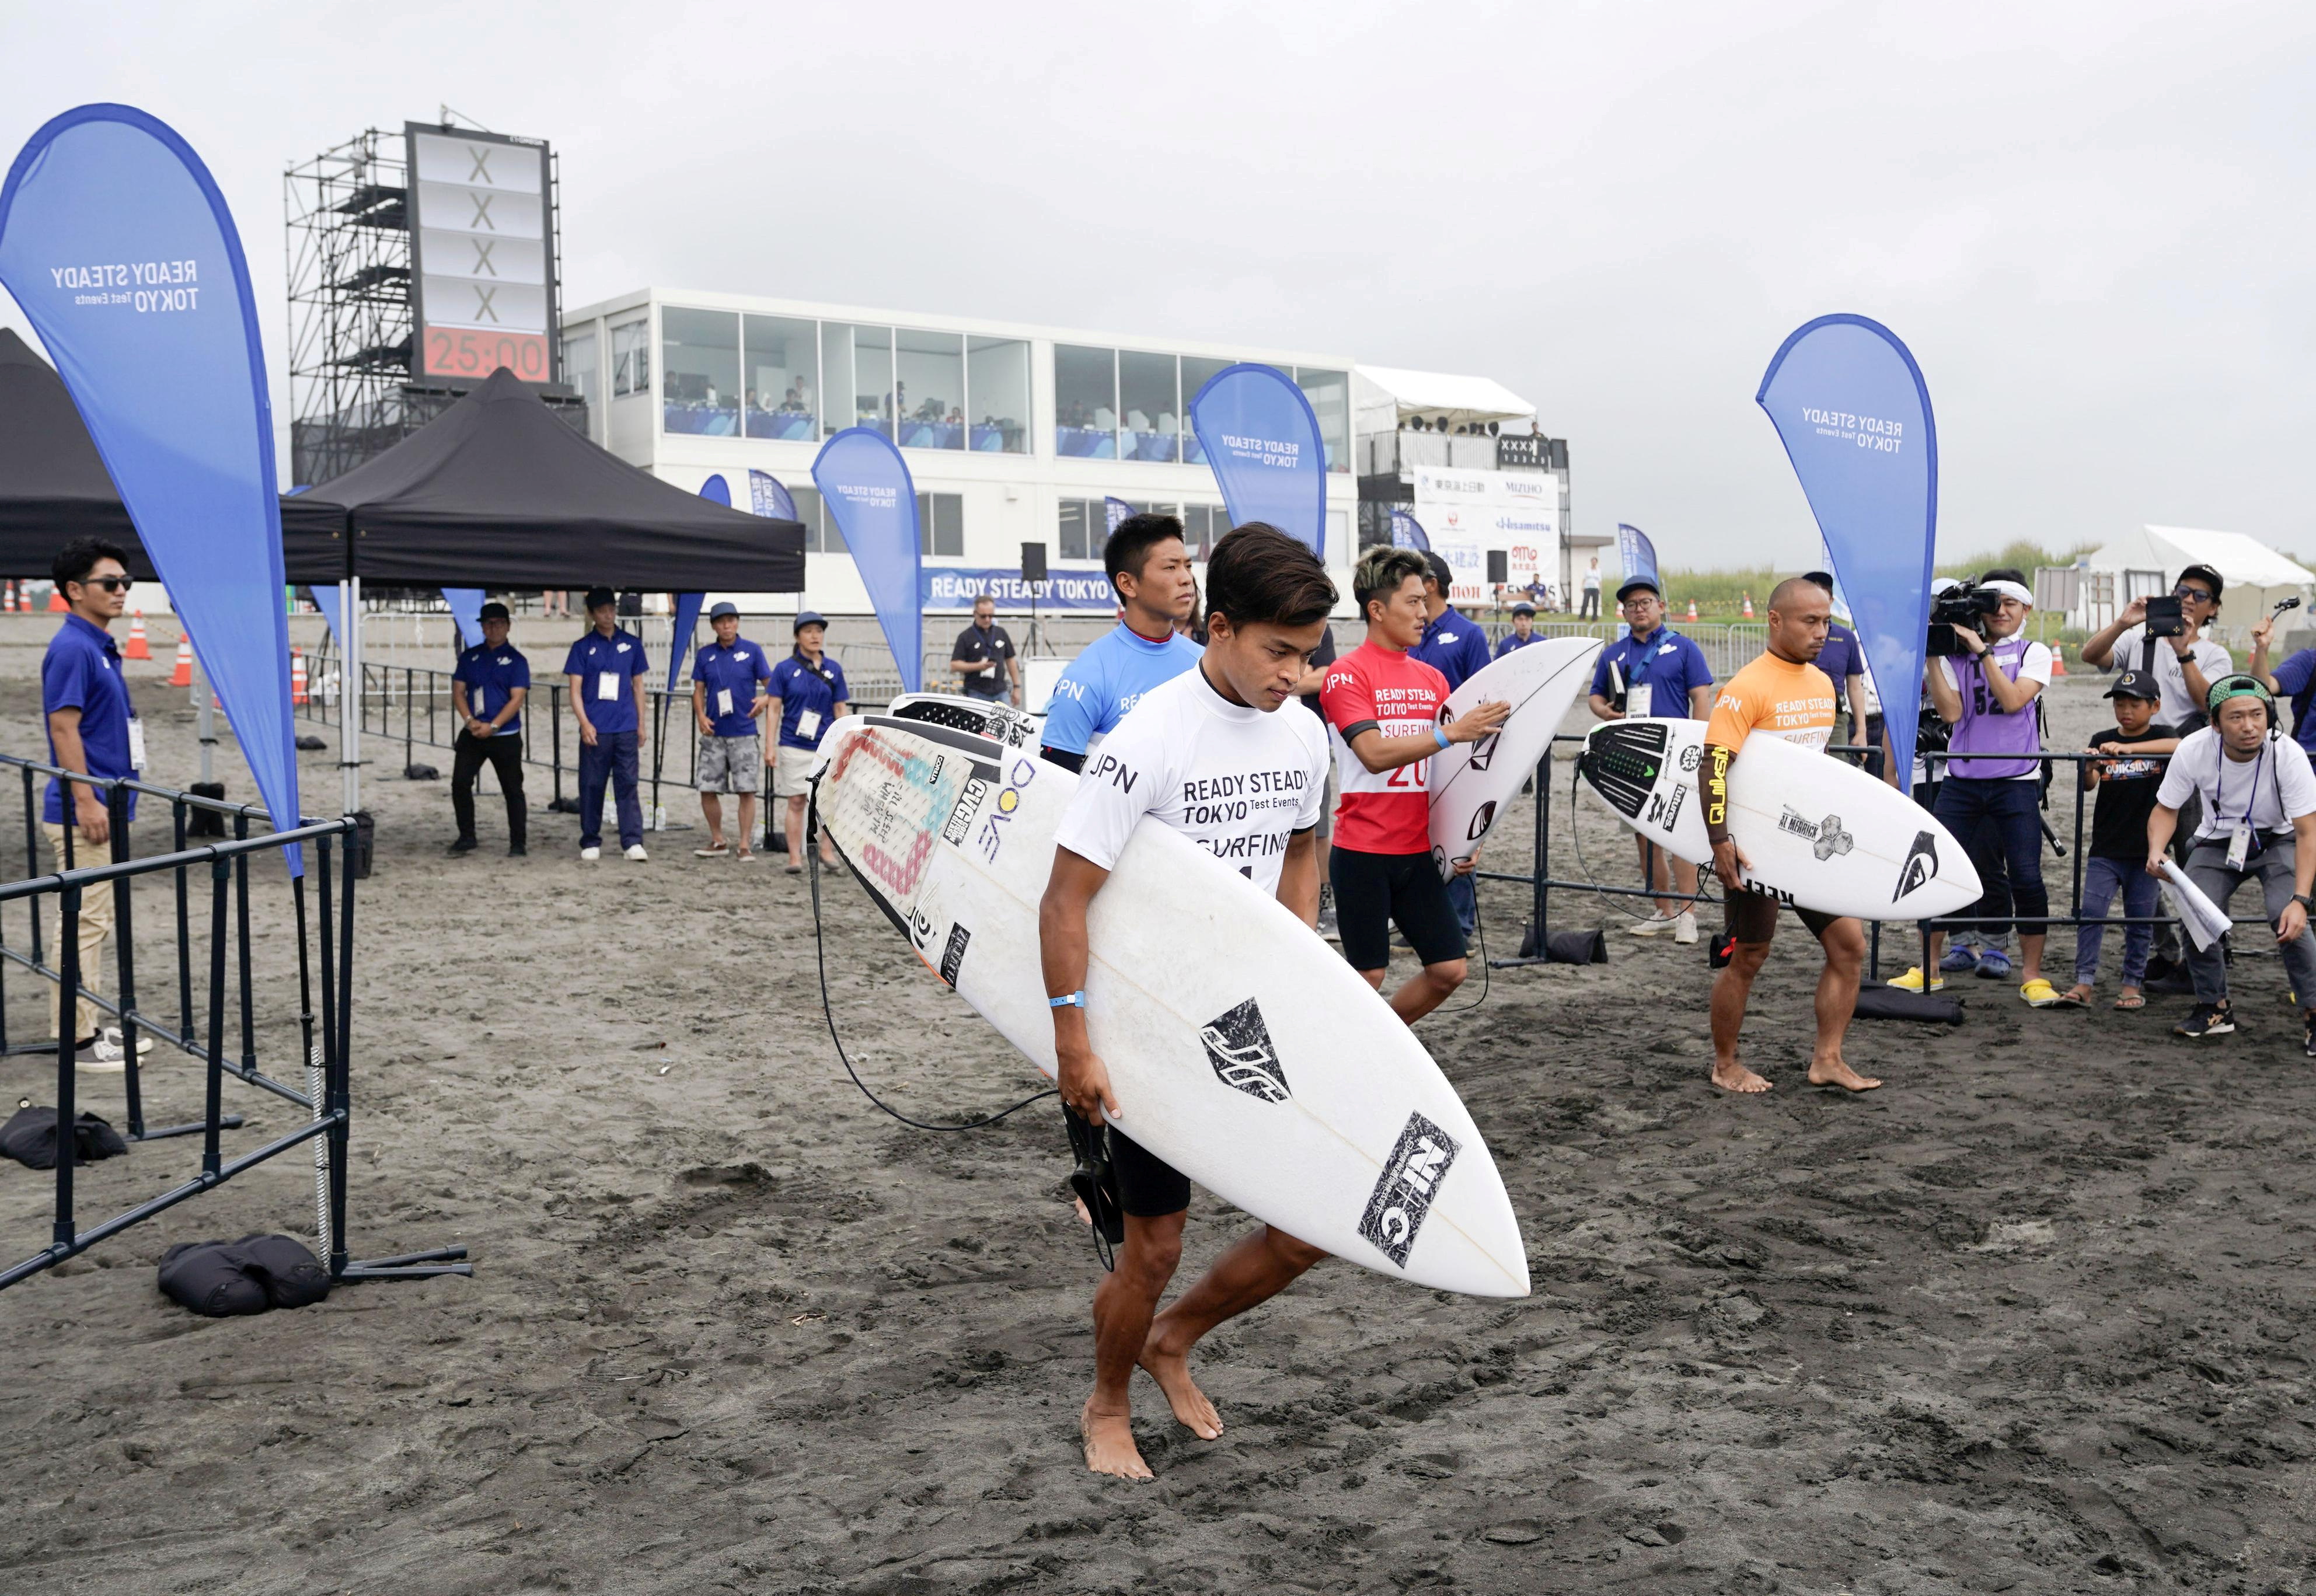 Competitors are seen during a Tokyo 2020 Olympics surfing test event at at Tsurigasaki-kaigan beach, also known as Shidashita beach in Ichinomiya Town, Japan